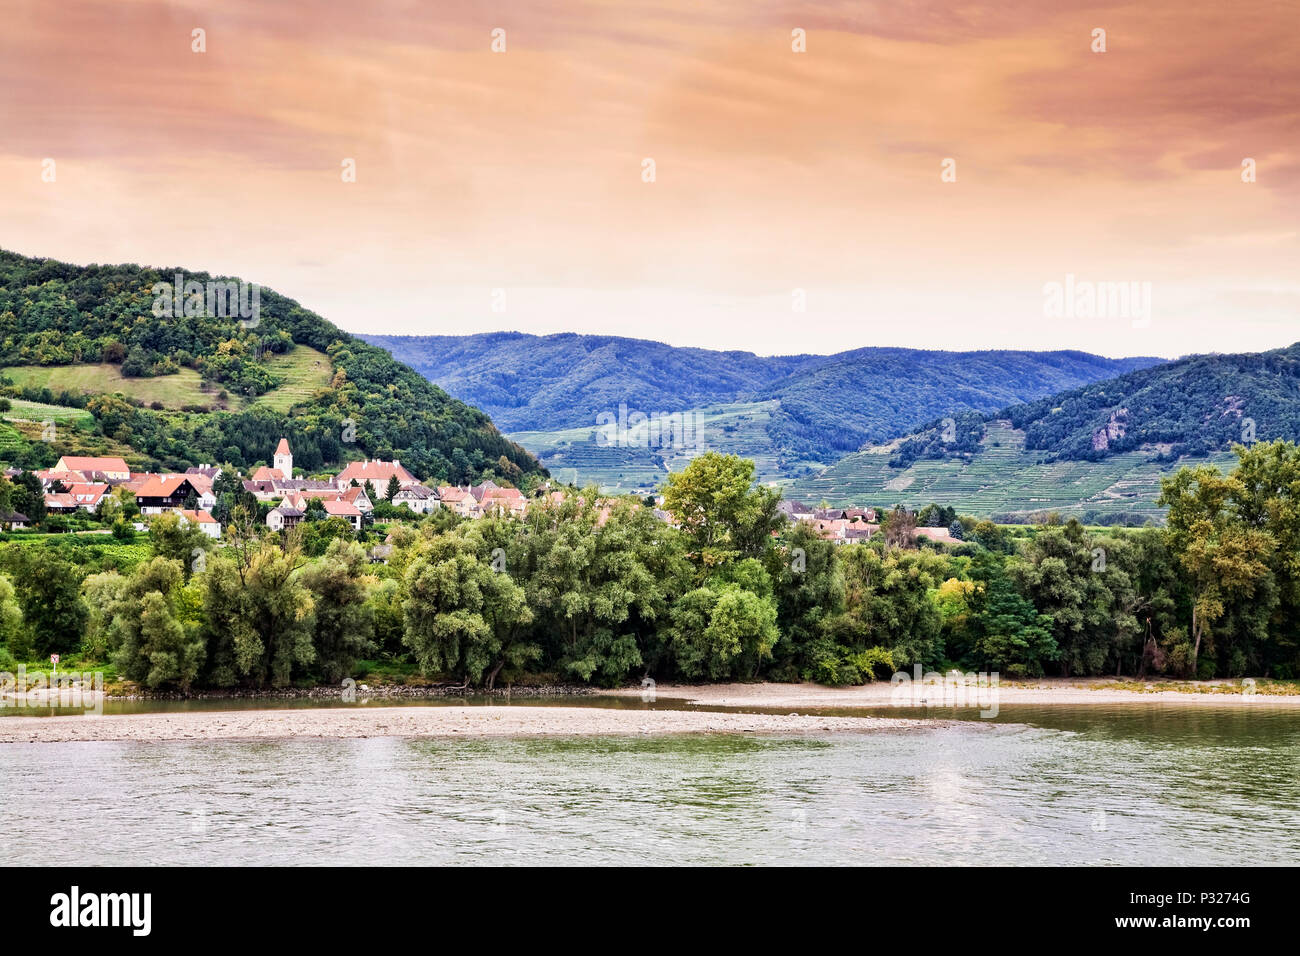 The village of Rossatz on the Danube River, Austria. Stock Photo